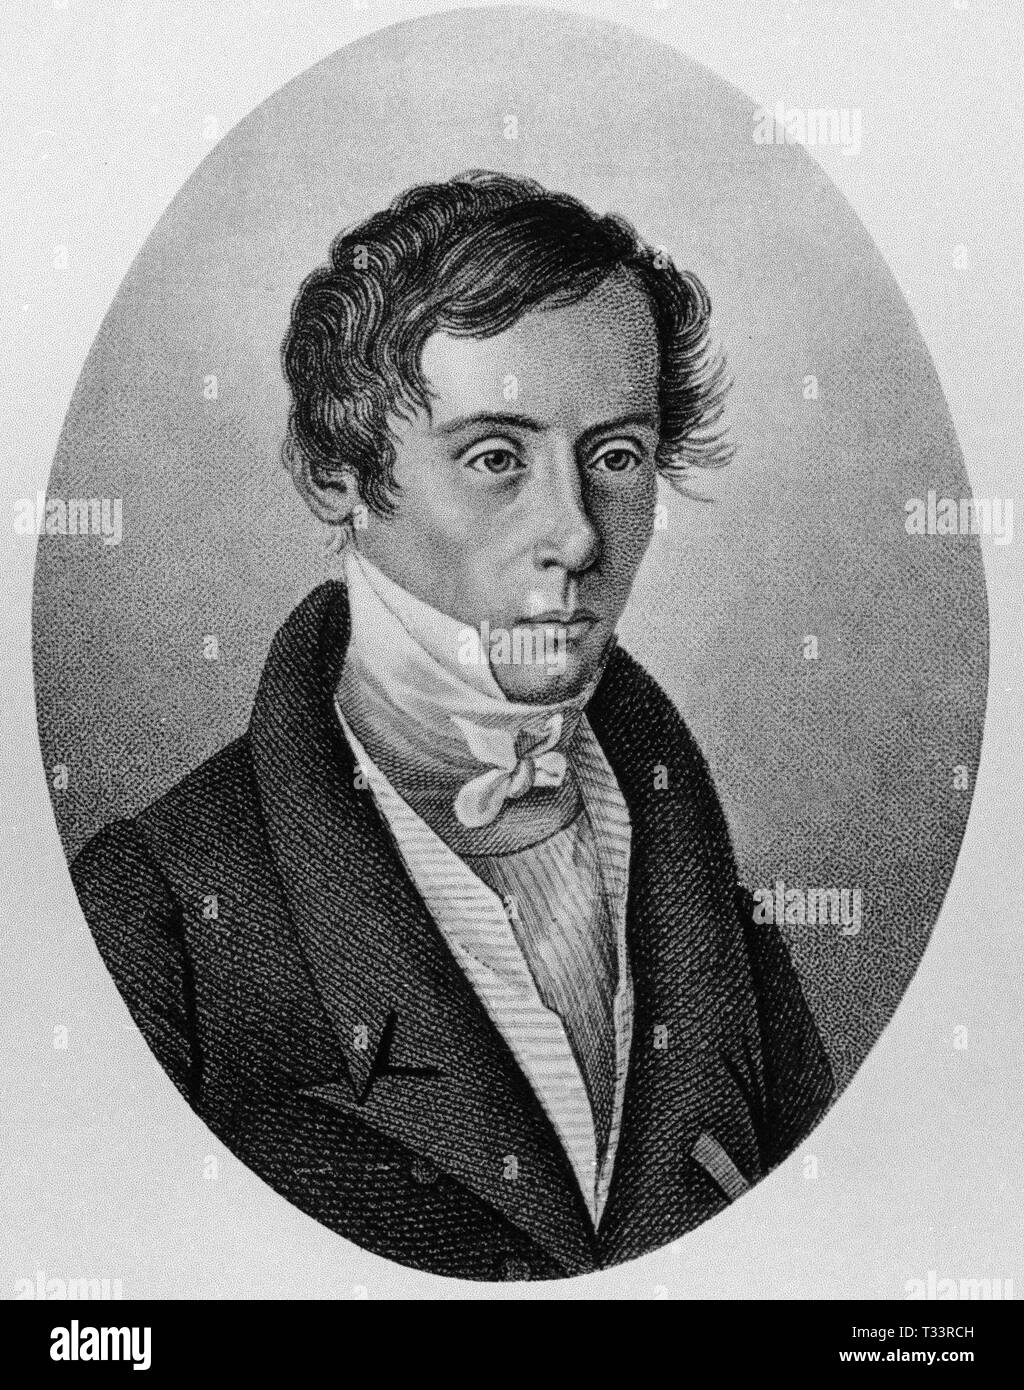 AGUSTIN FRESNEL 1788/1827, FISICO FRANCES, INVENTOR DE LA TEORIA ONDULATORIA DE LA LUZ. Stock Photo